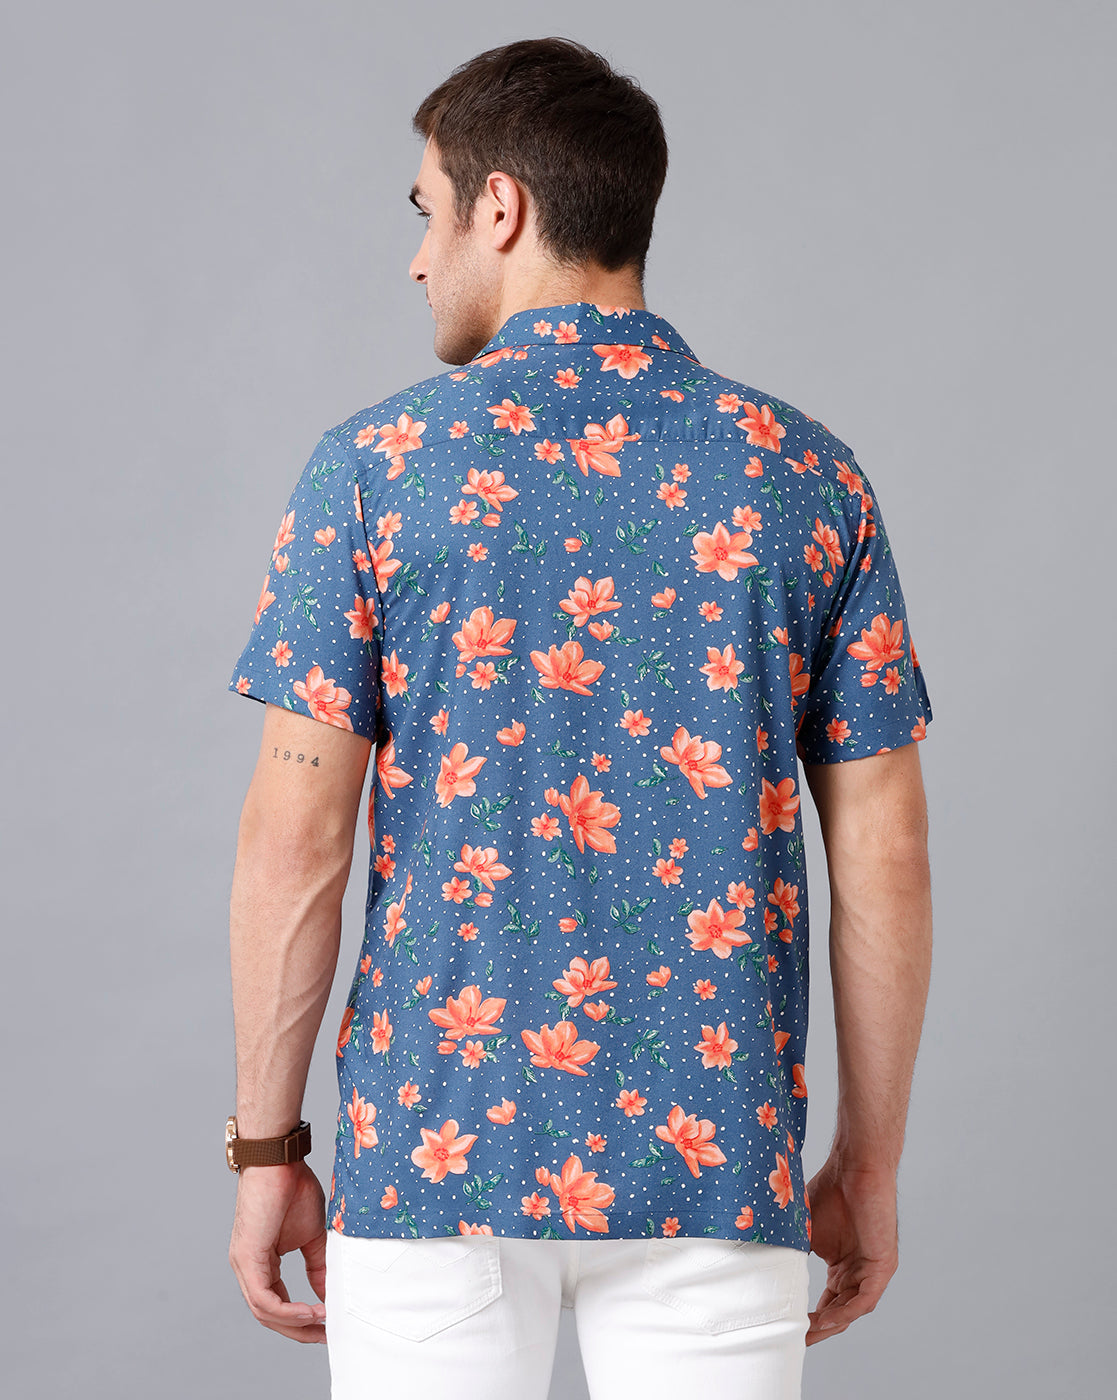 Flower printed half shirts